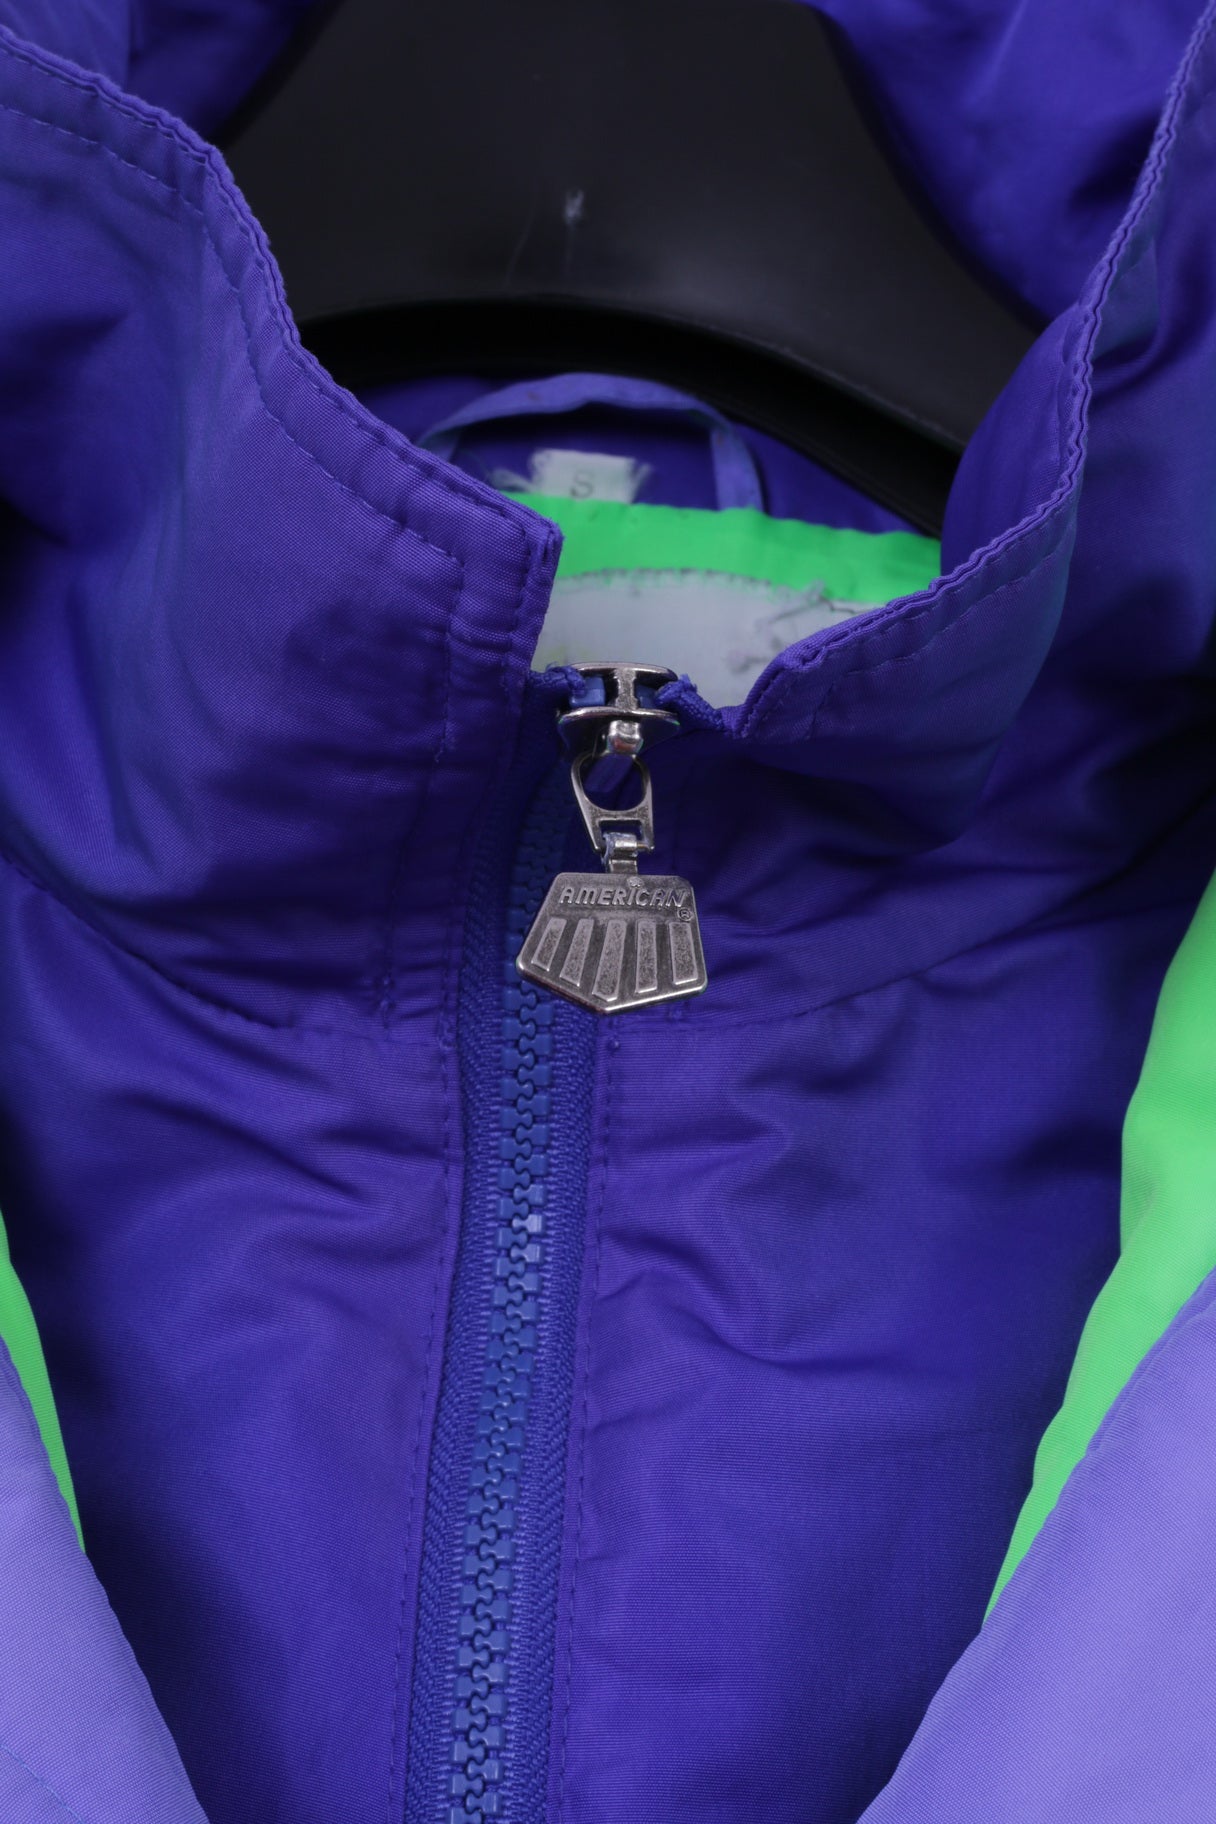 American Clothing Company Mens S Jacket Purple High Tech Full Zipper Hooded Retro Top